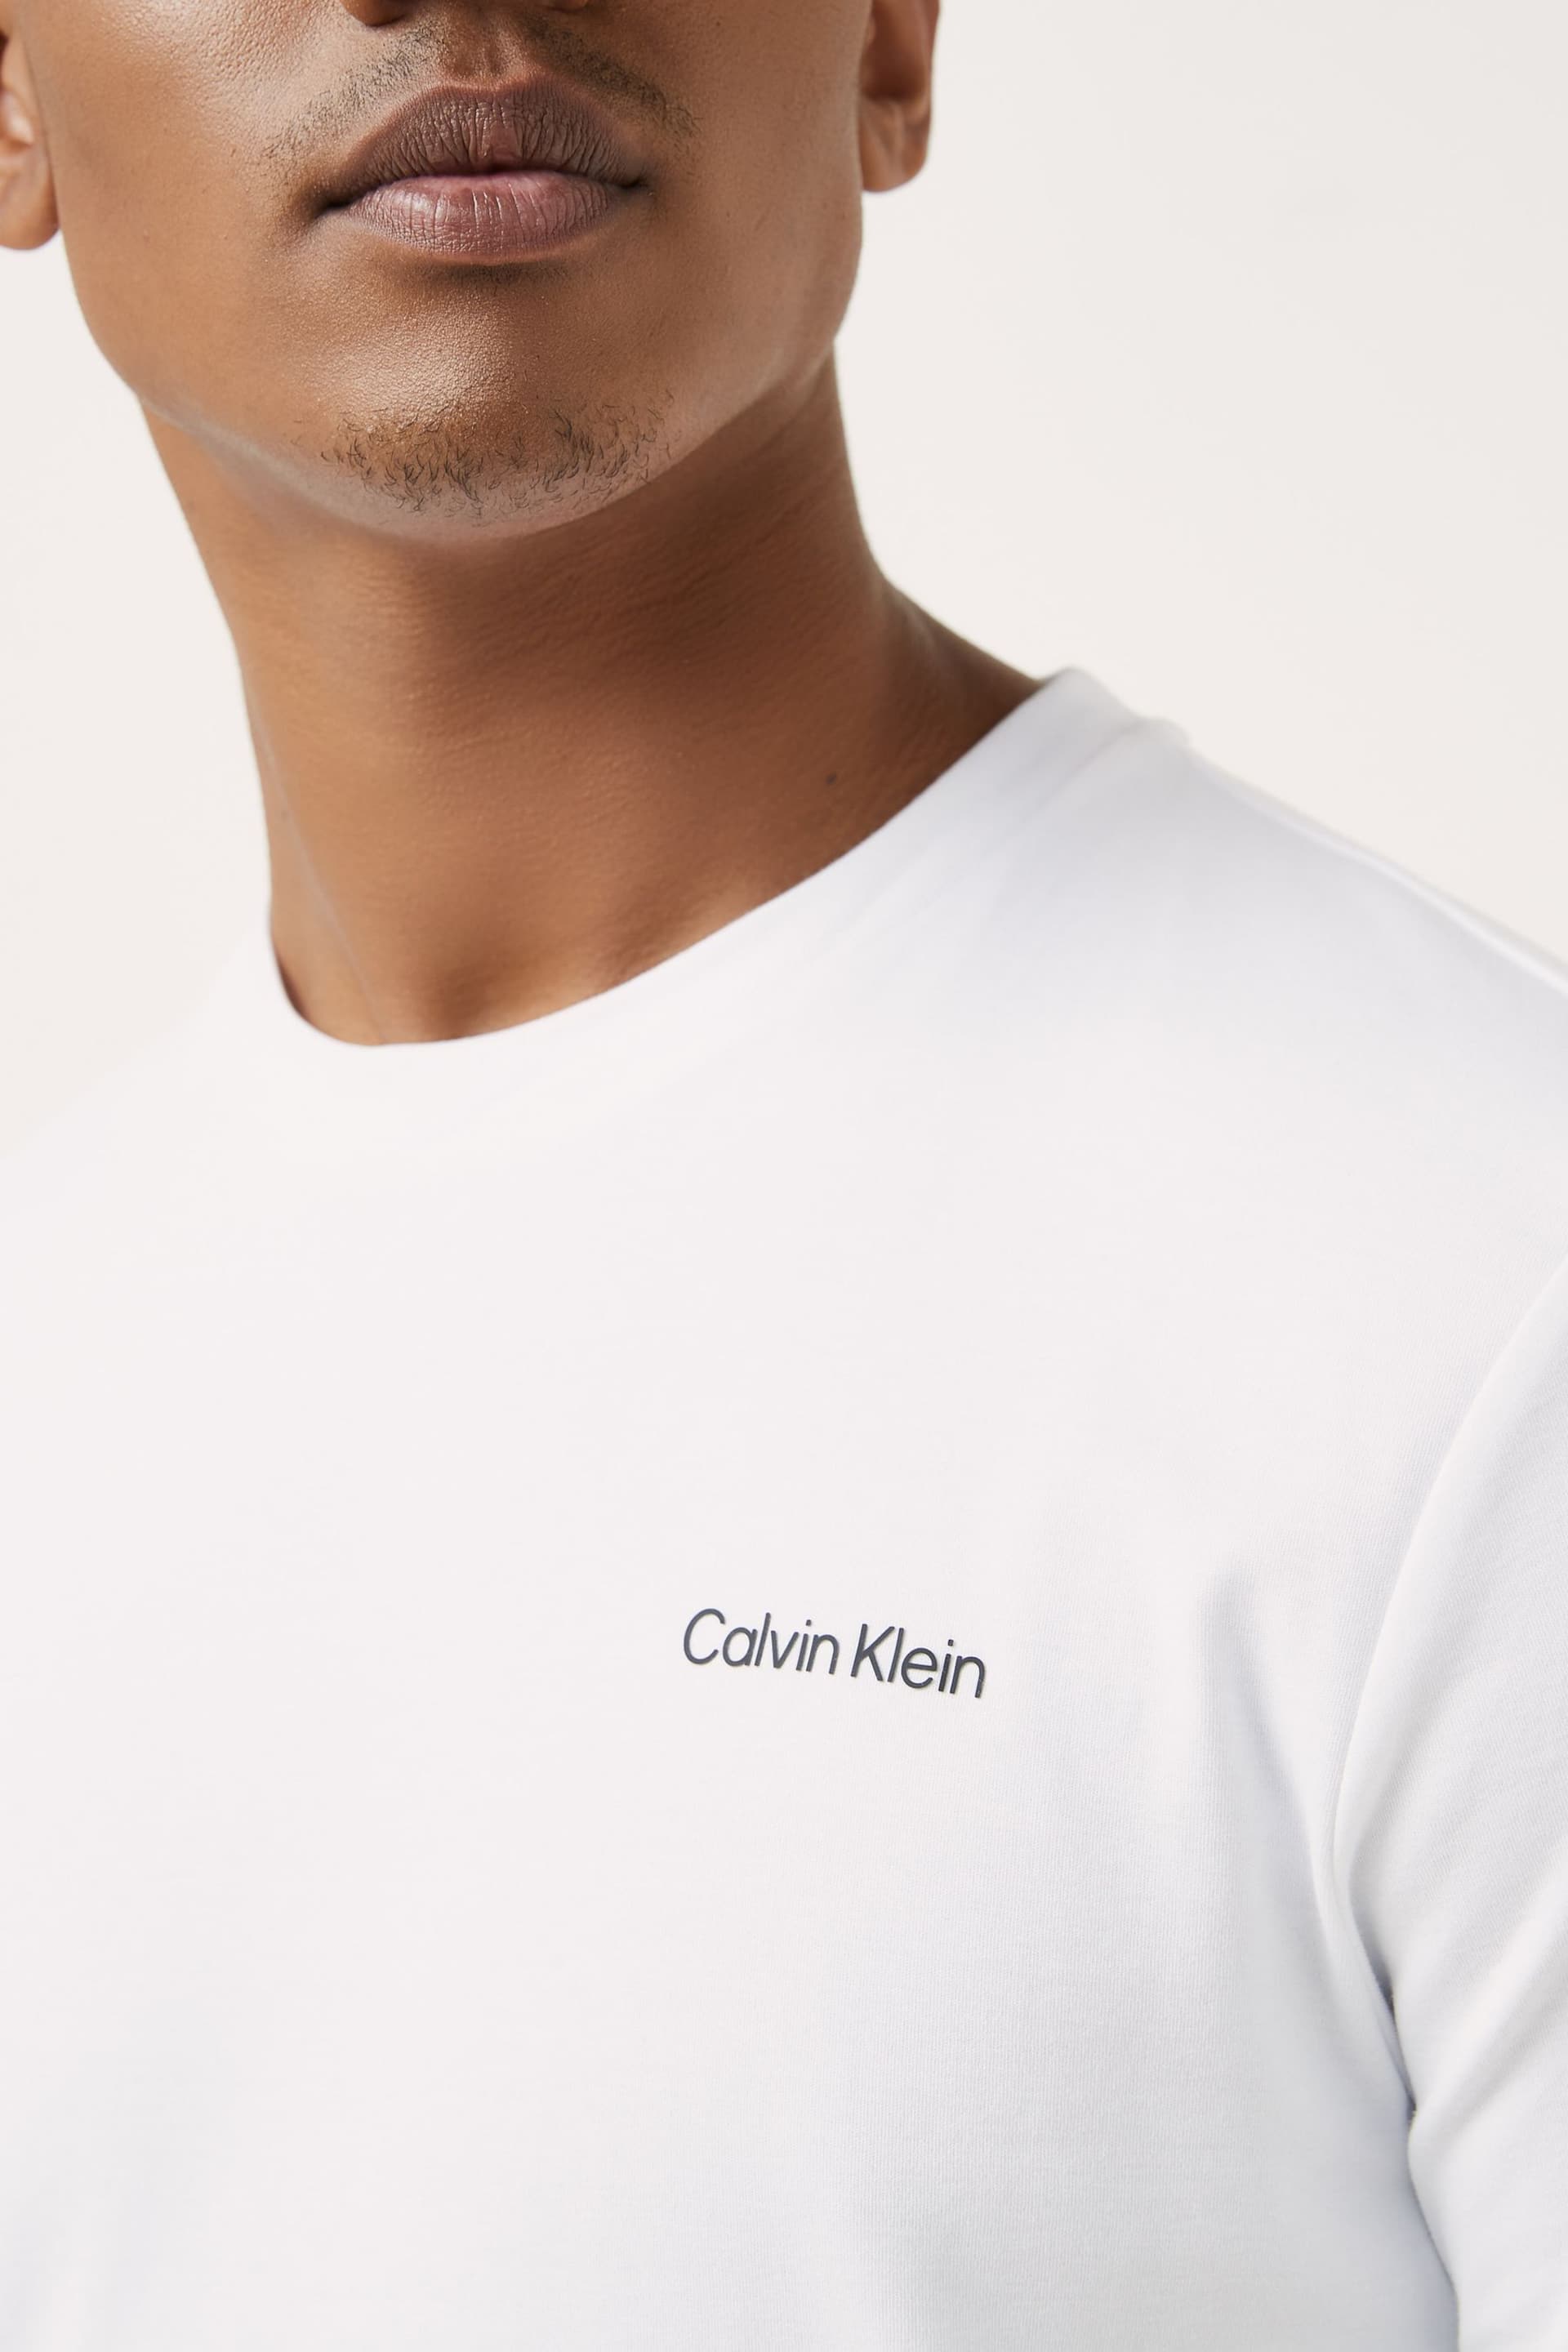 Calvin Klein White Interlock Logo T-Shirt - Image 3 of 5